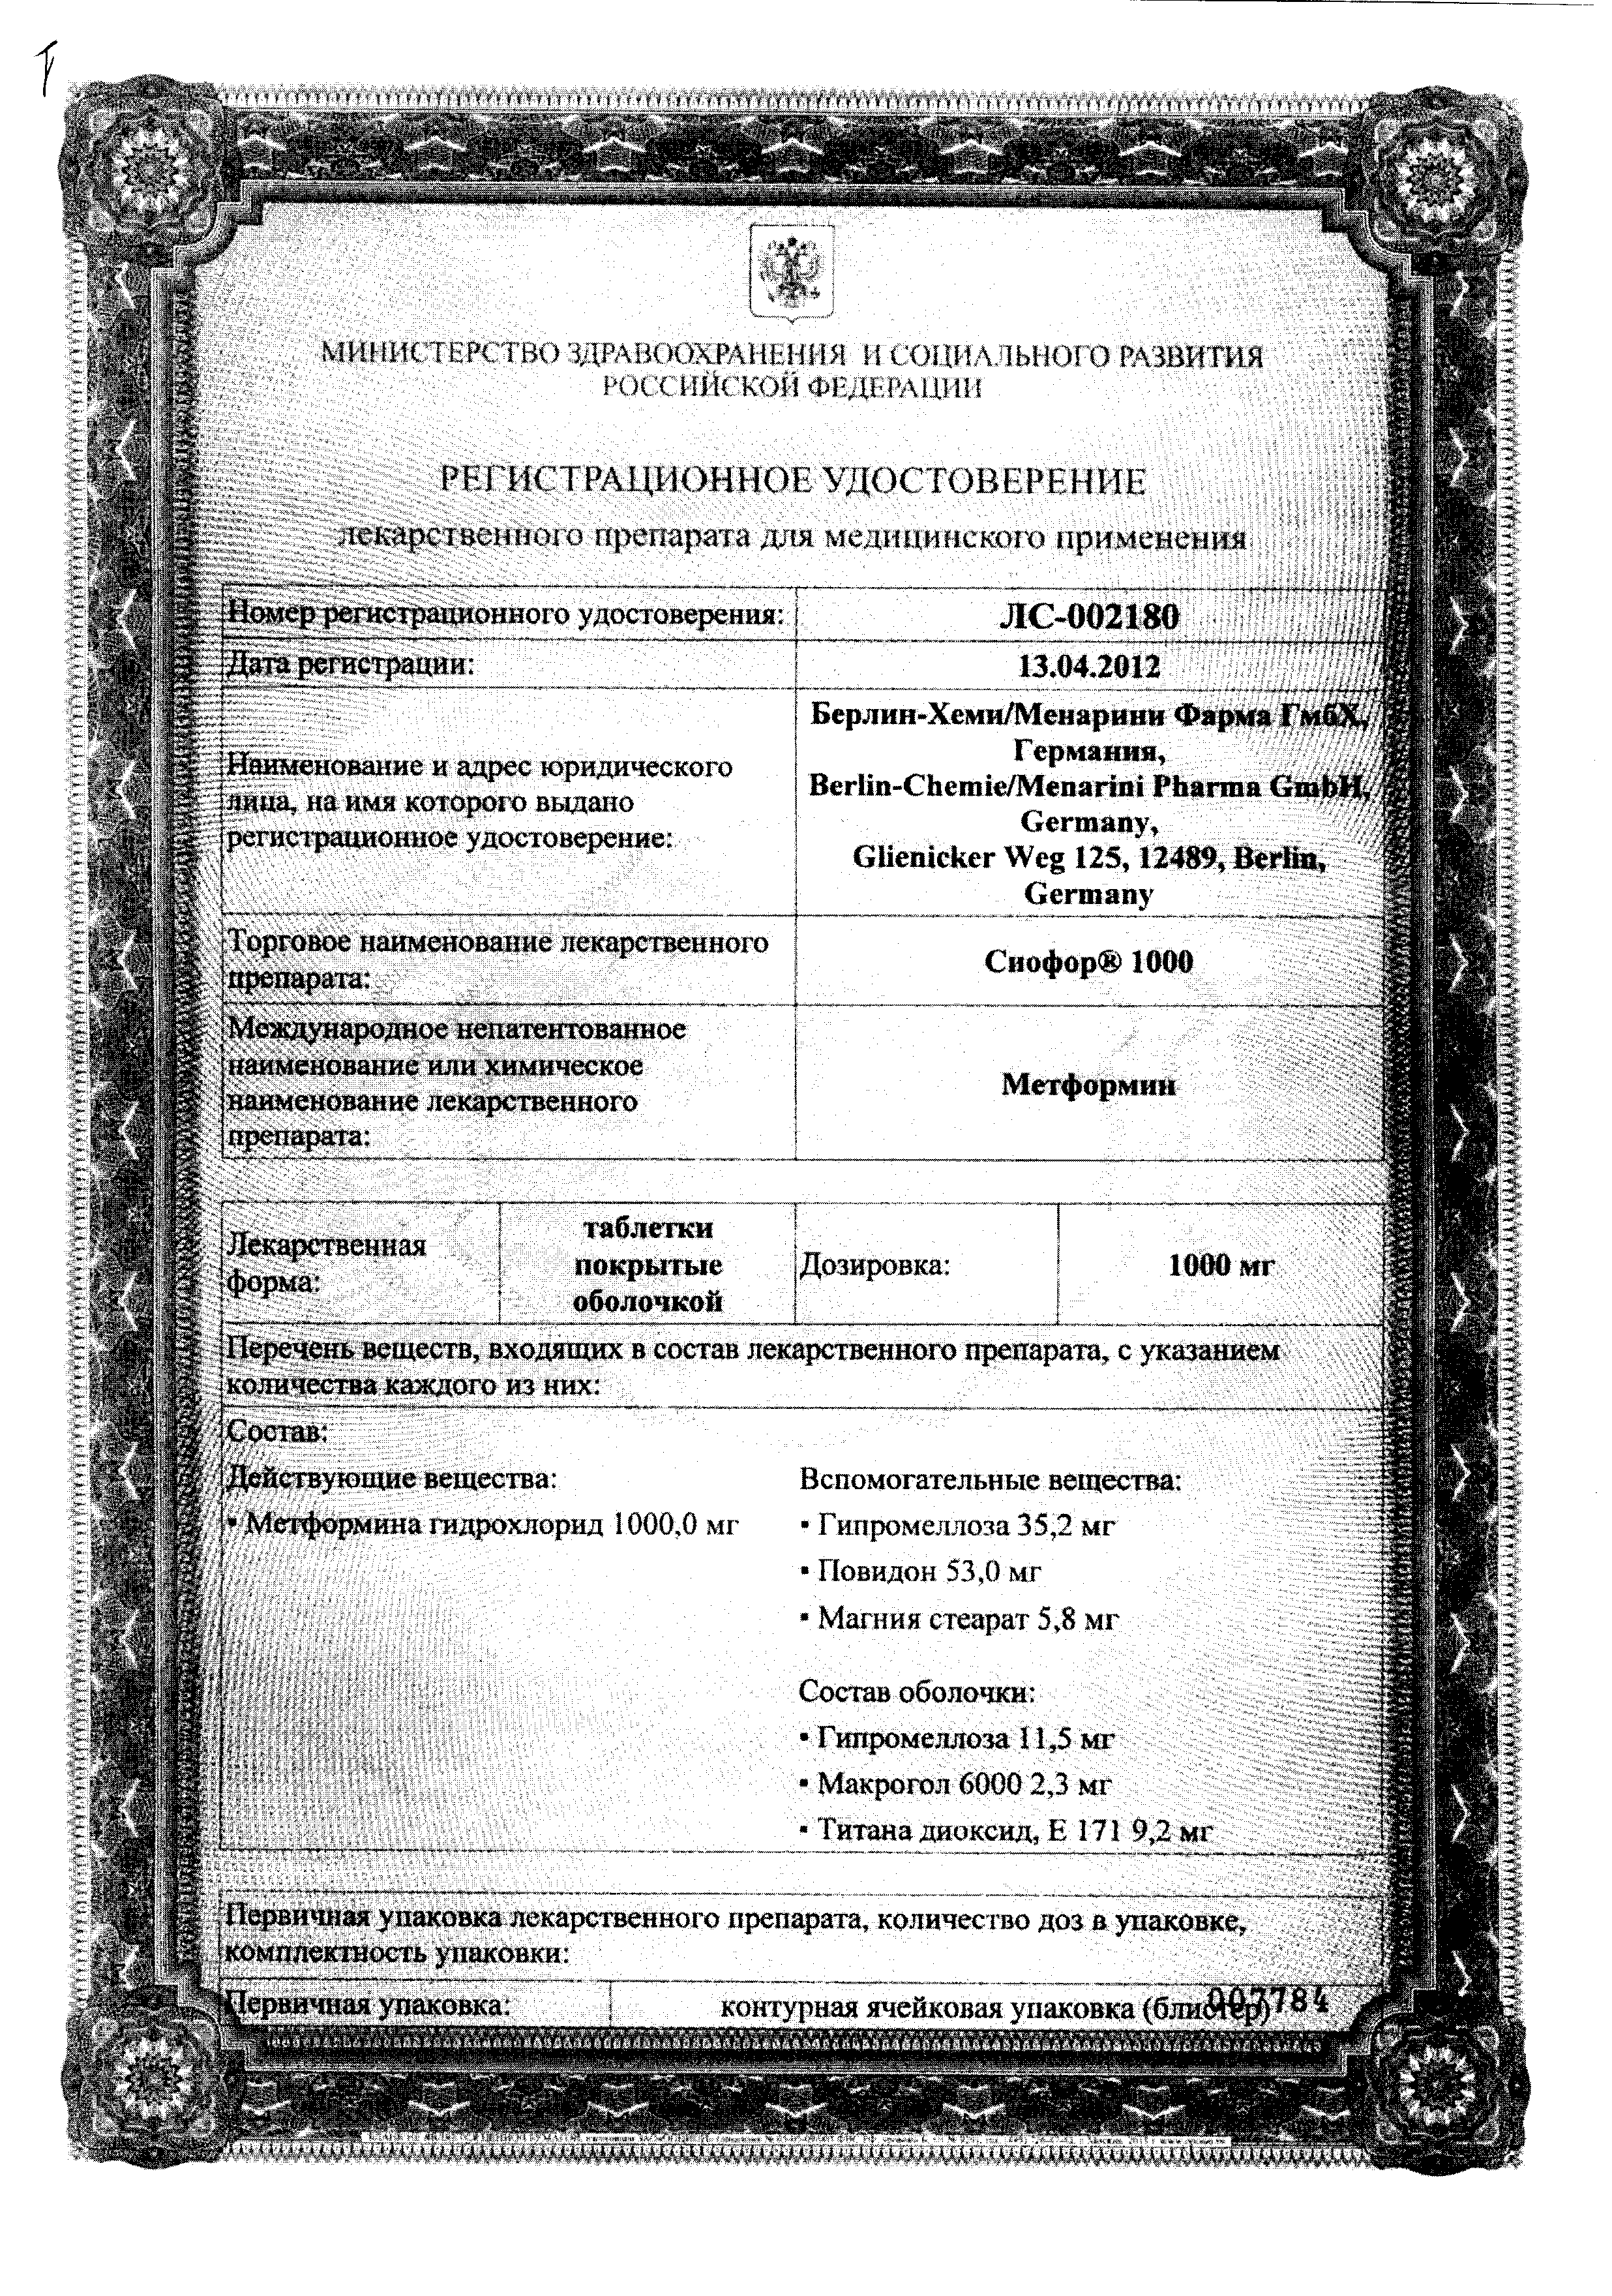 Сиофор 1000 сертификат